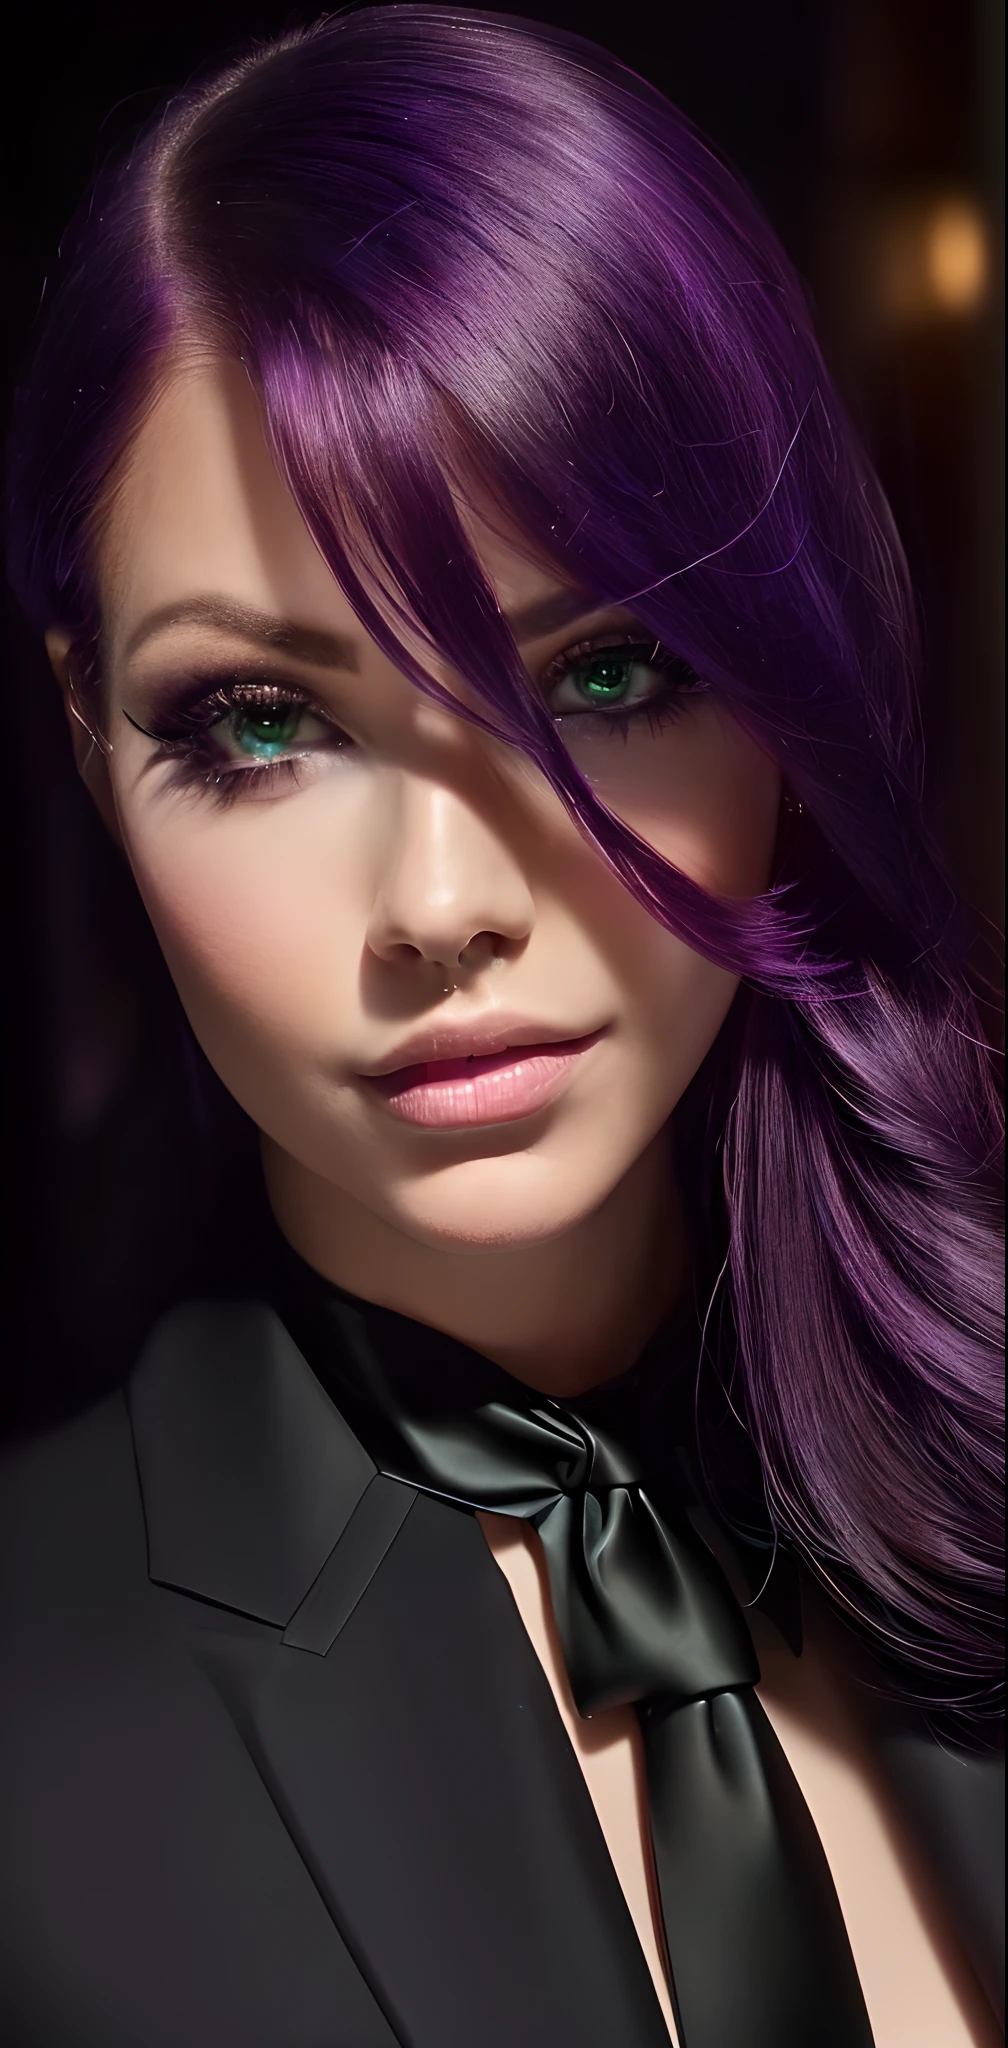 a 模特兒女人的特寫 with purple hair and a ((黑领带)), 肖像太空學員女孩, 佐迪亞騎士的女人肖像, 模特兒女人的特寫, , 有着发光的绿色眼睛,